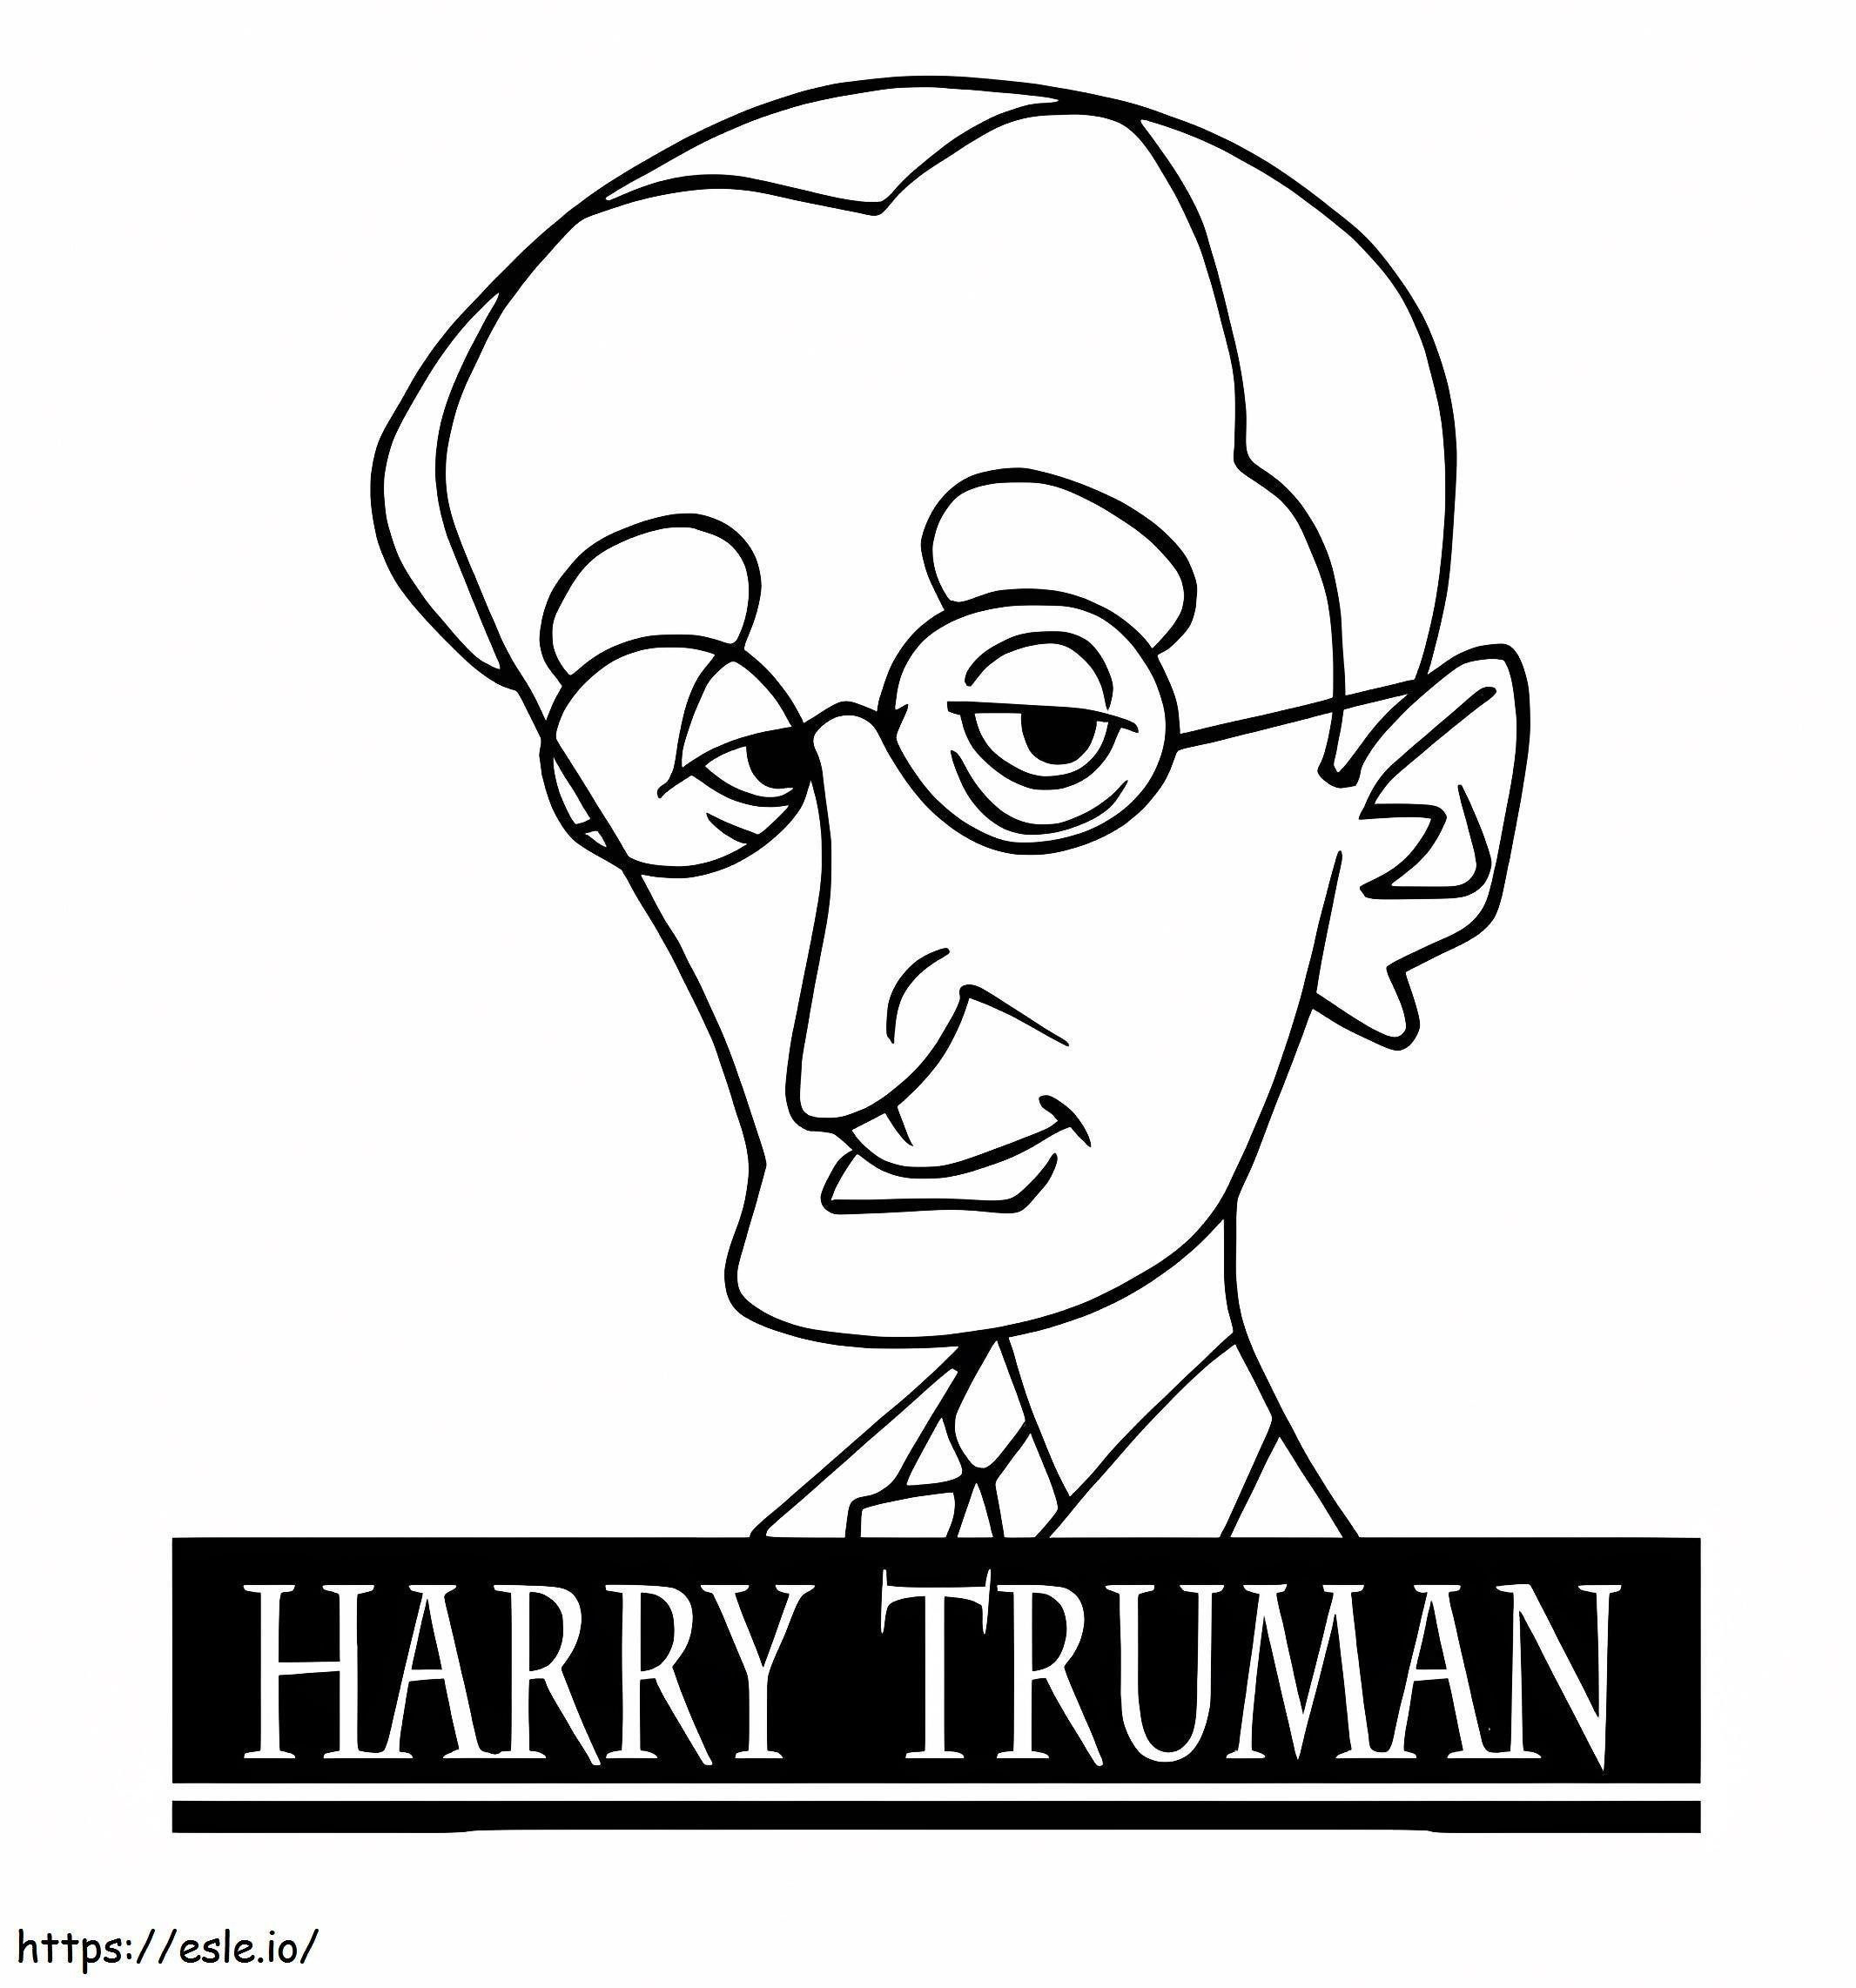 Imprimible Harry S. Truman para colorear